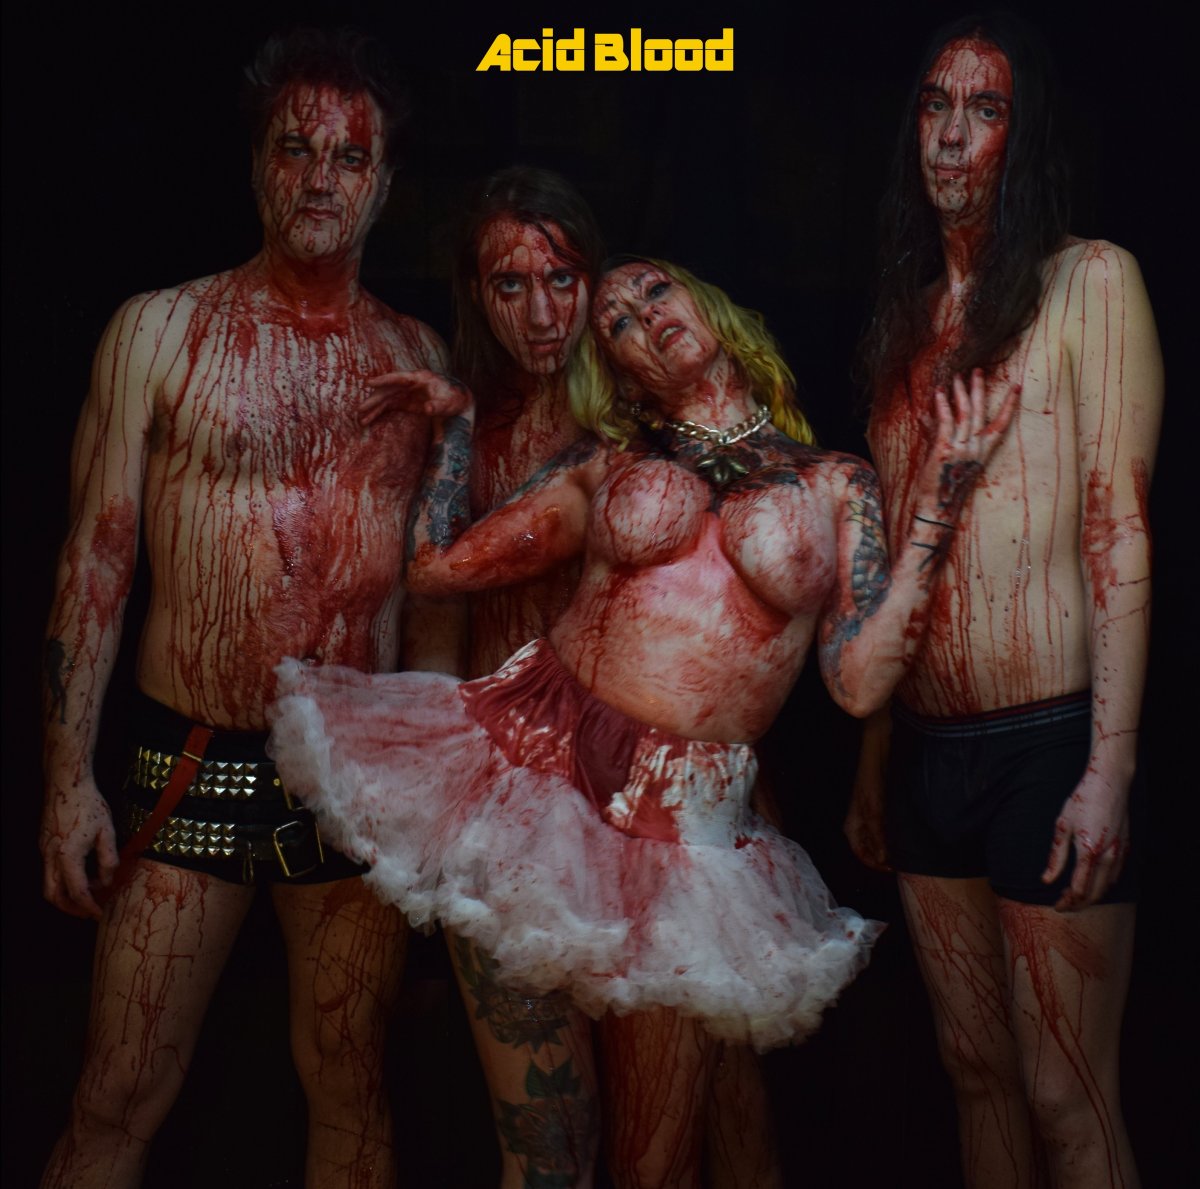 Acid Blood: Nuevo single y videoclip “To The Grape”